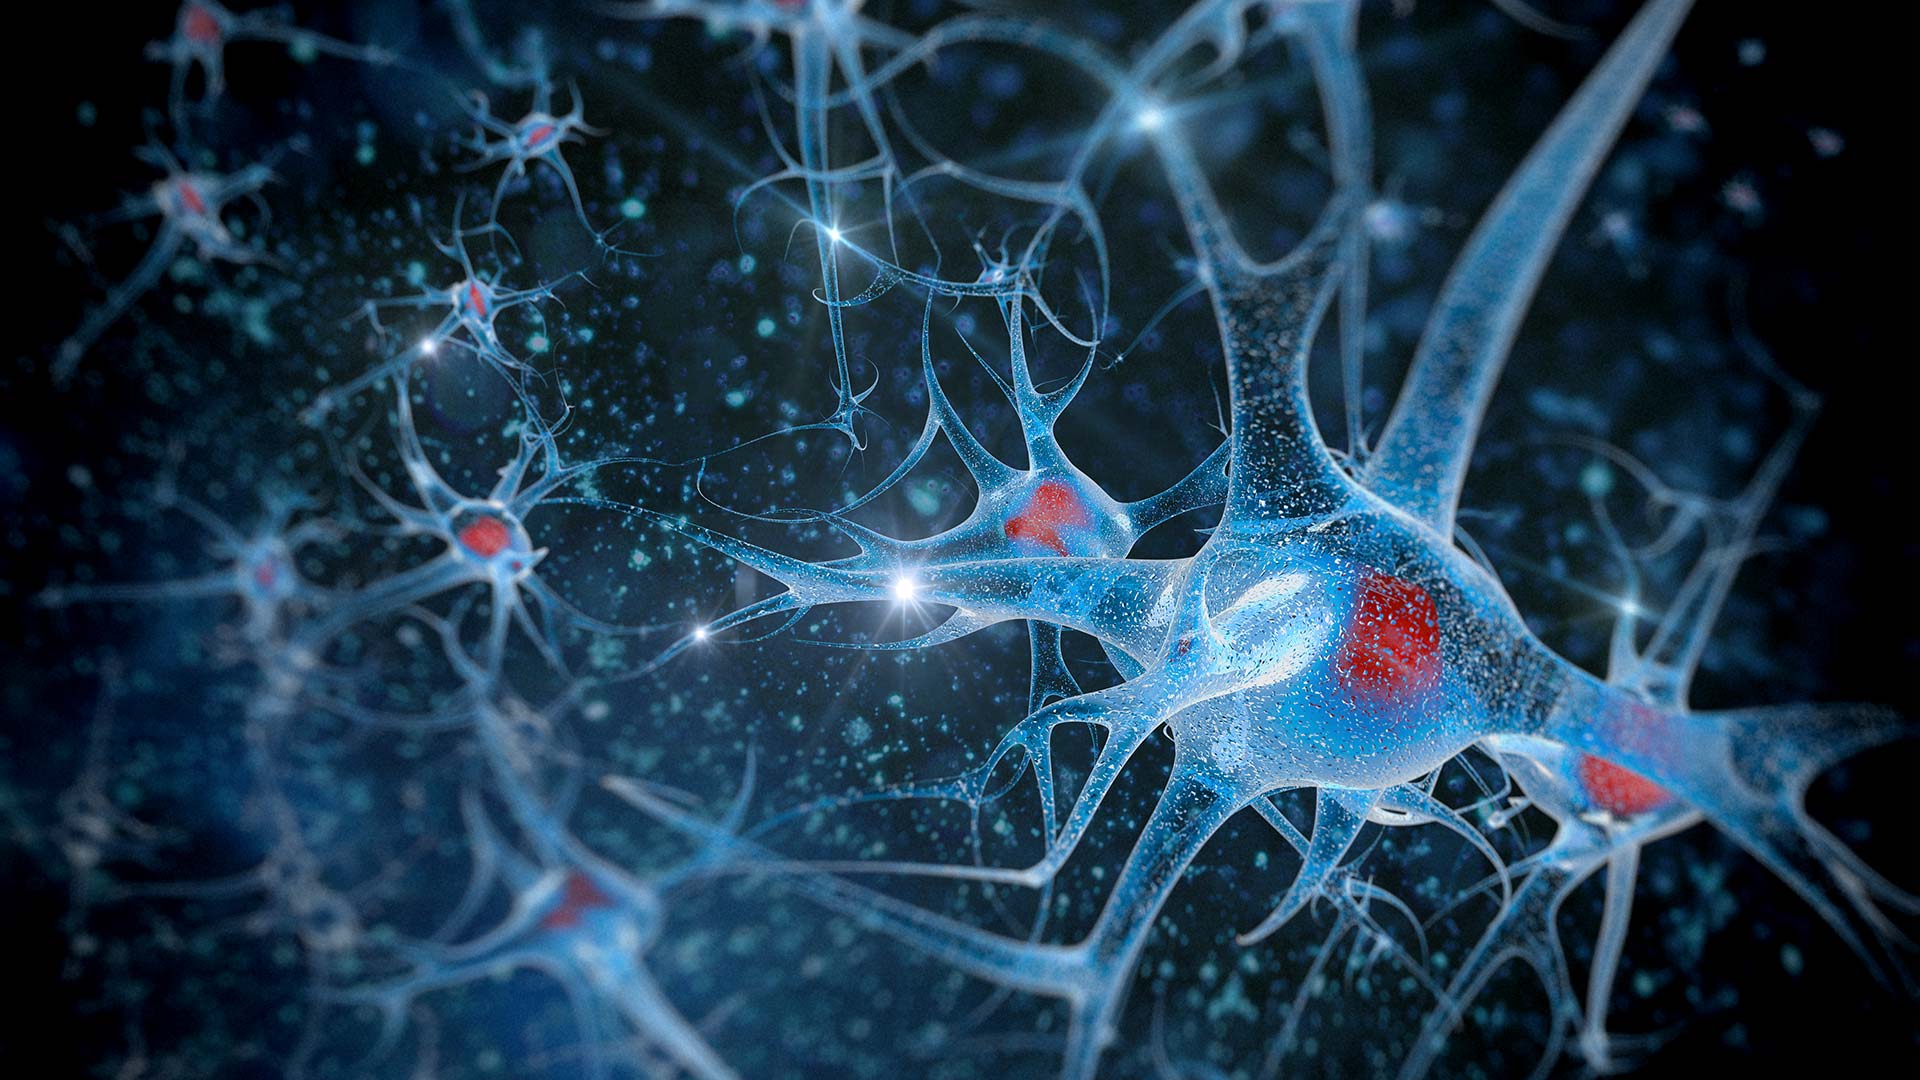 Digital illustration neurons showing pain receptors in the brain.